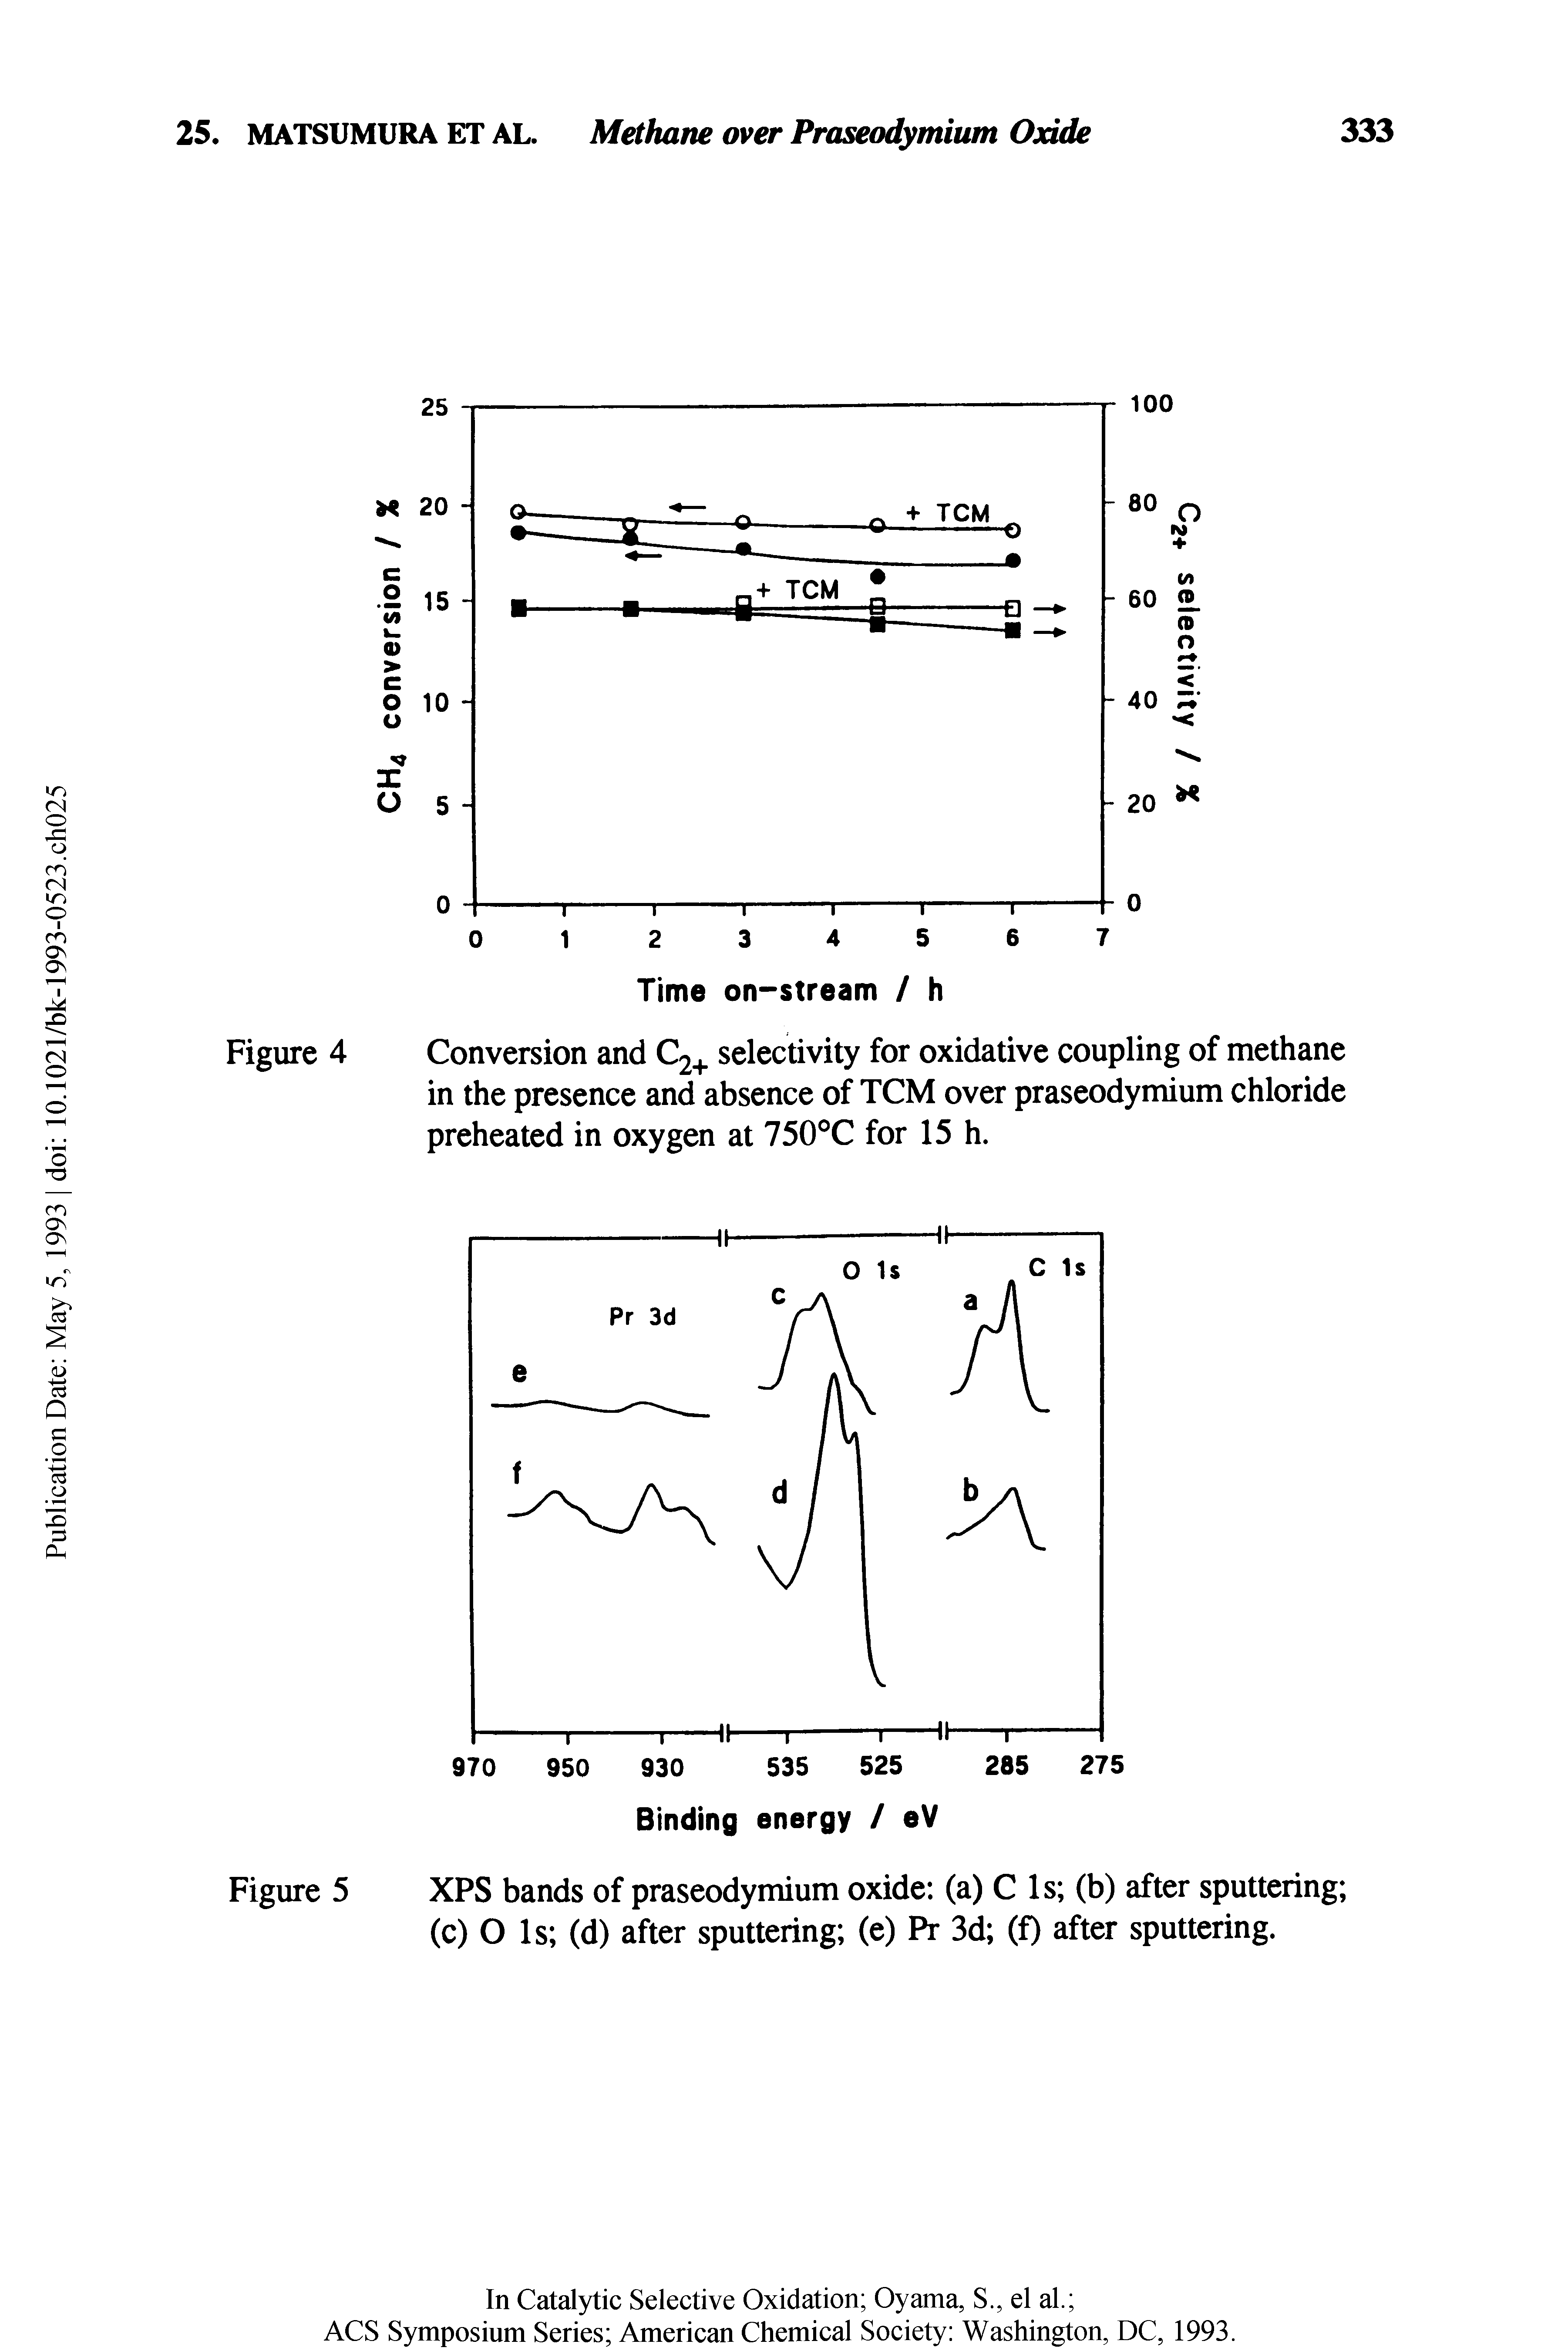 Figure 5 XPS bands of praseodymium oxide (a) C Is (b) after sputtering (c) O Is (d) after sputtering (e) Pr 3d (f) after sputtering.